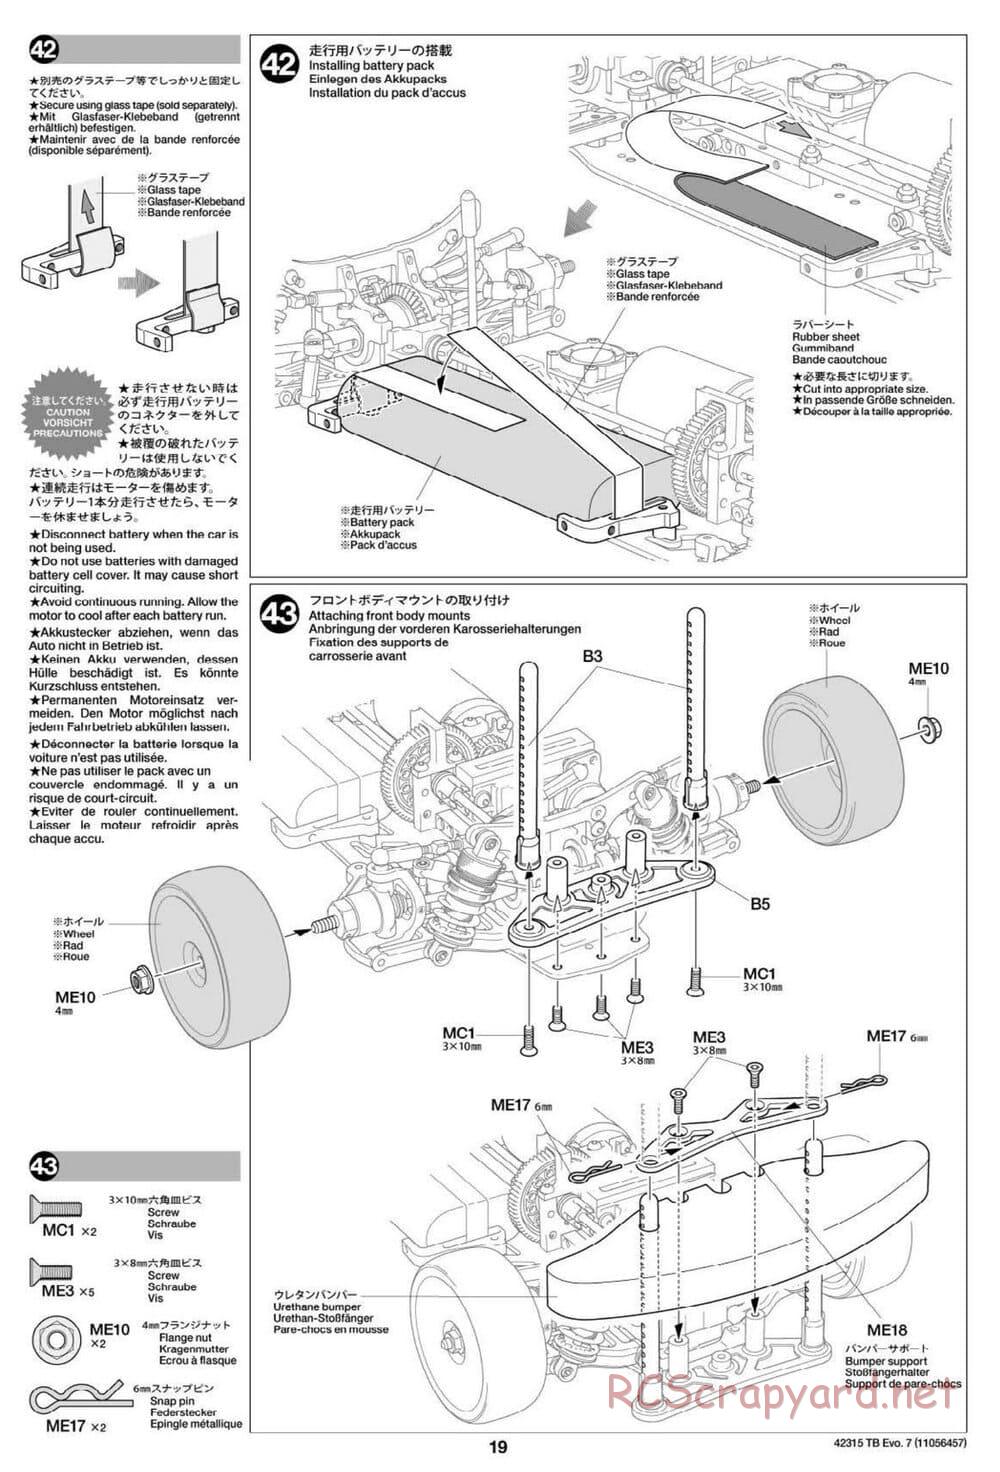 Tamiya - TB Evo.7 Chassis - Manual - Page 19